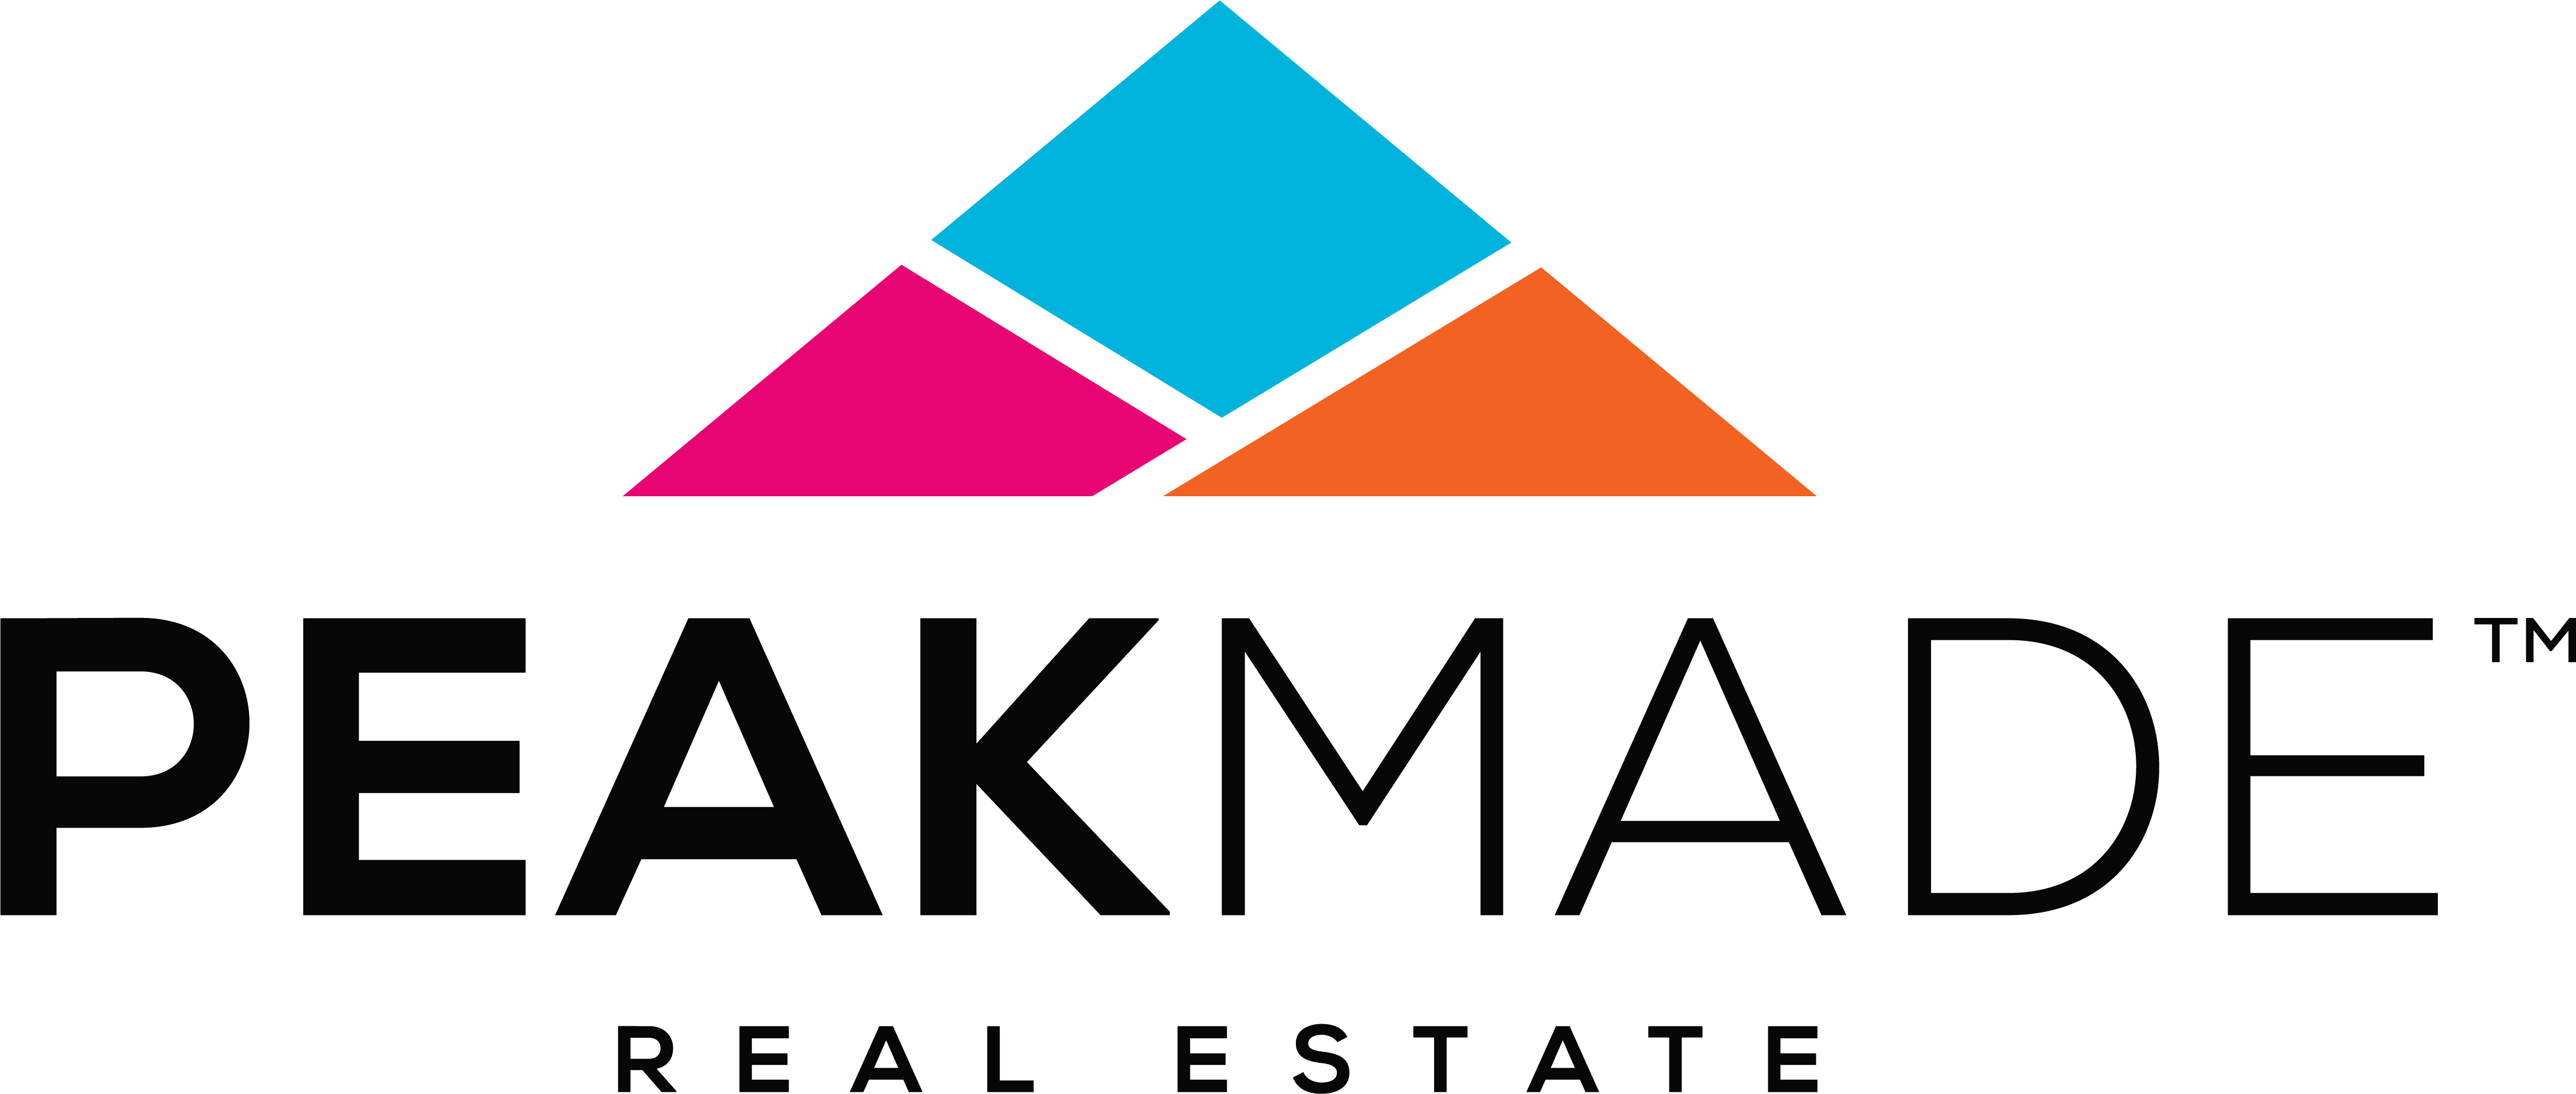 PeakMade Real Estate Company Logo